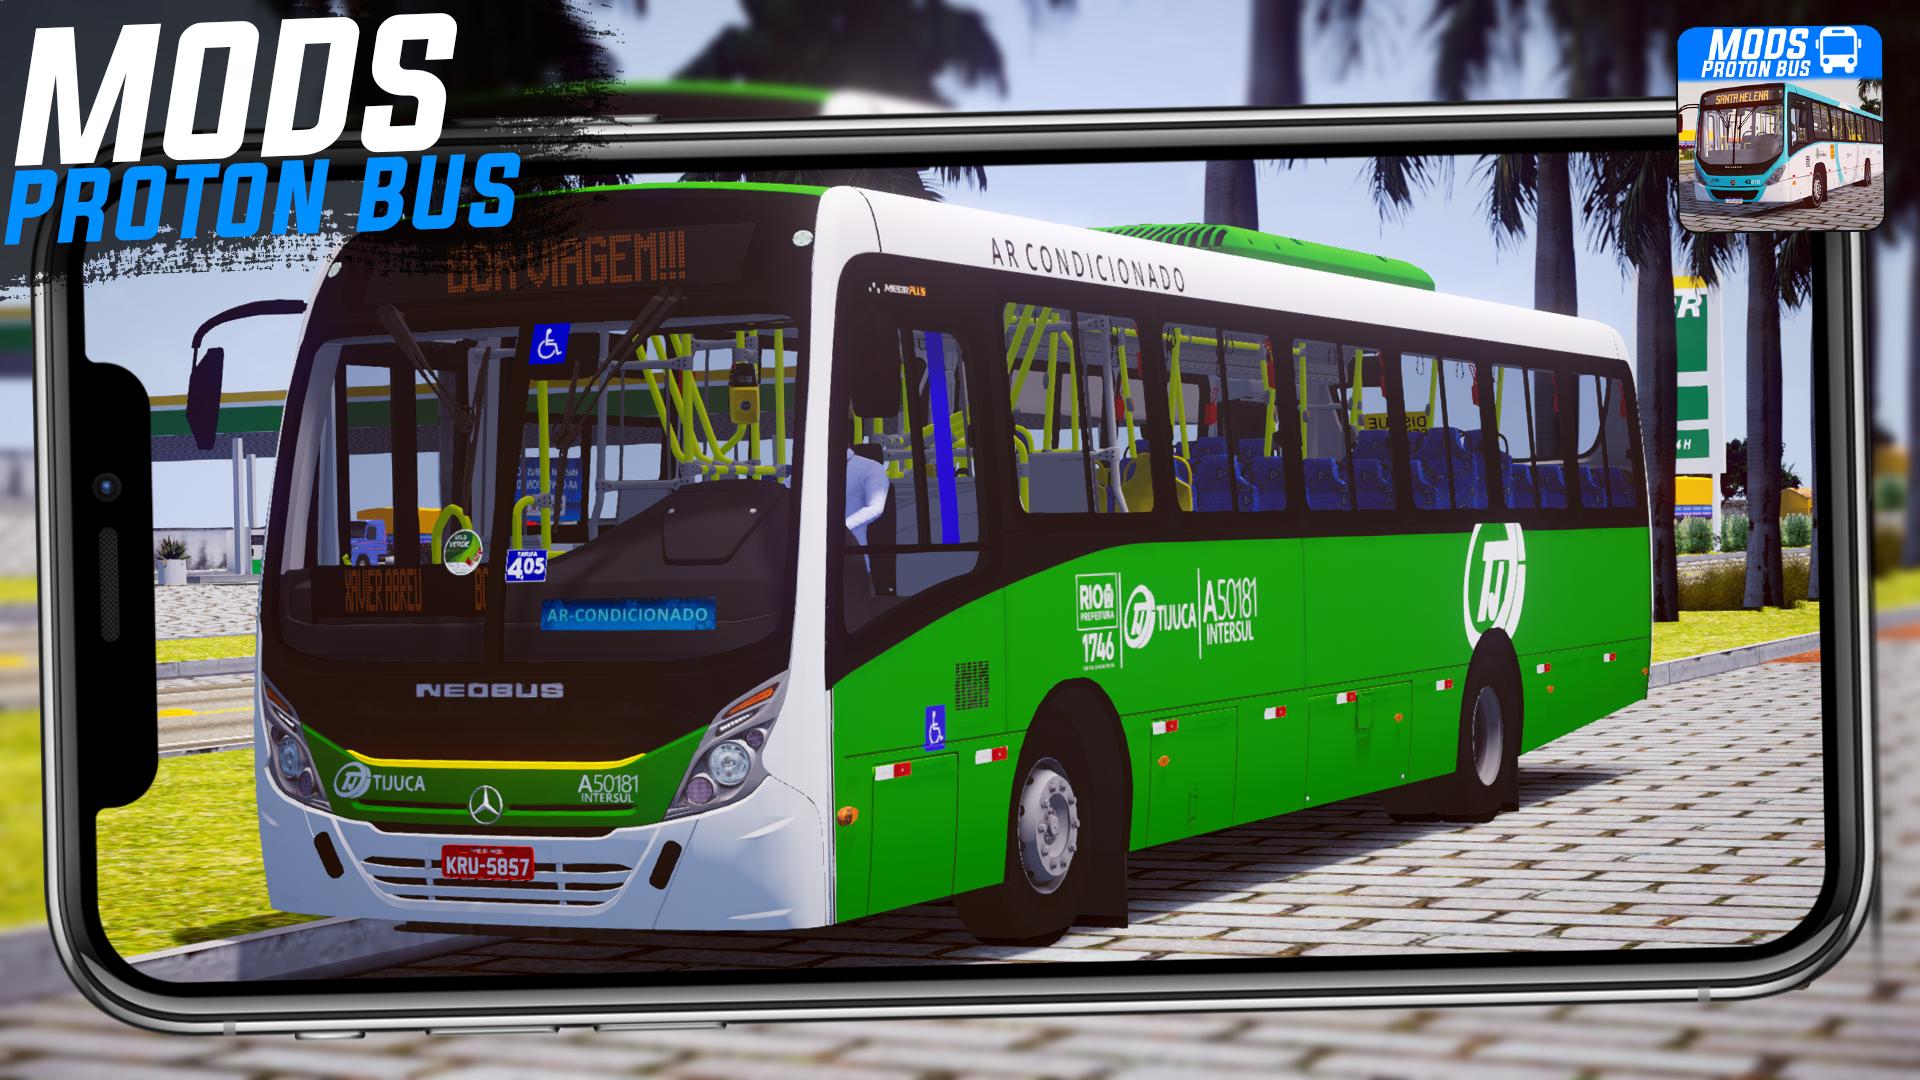 Download Proton Bus Simulator Urbano android on PC